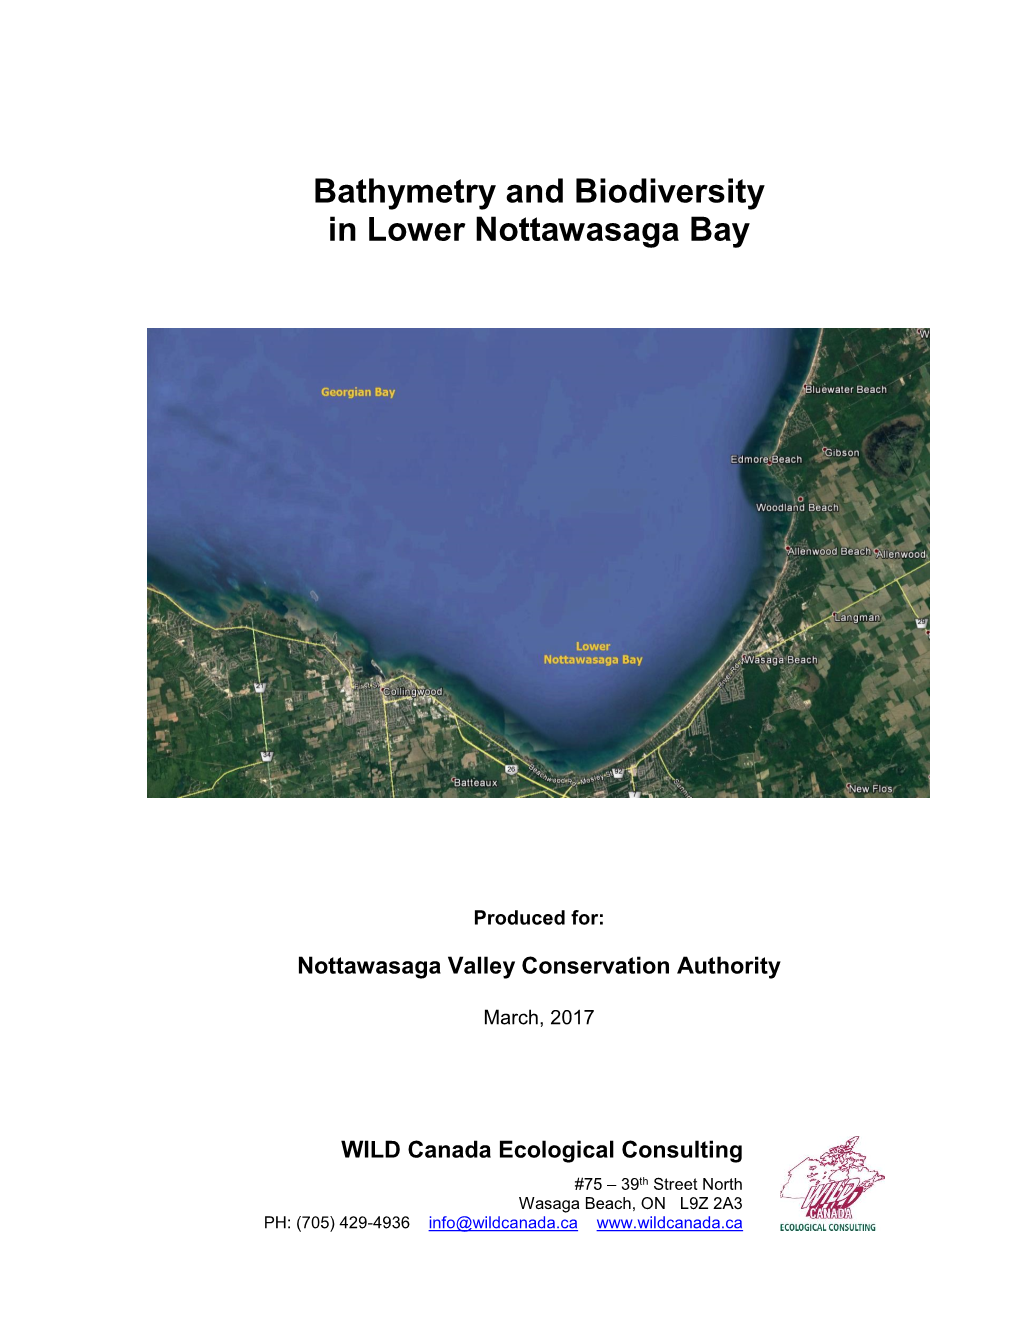 Bathymetry and Biodiversity in Nottawasaga Bay Report